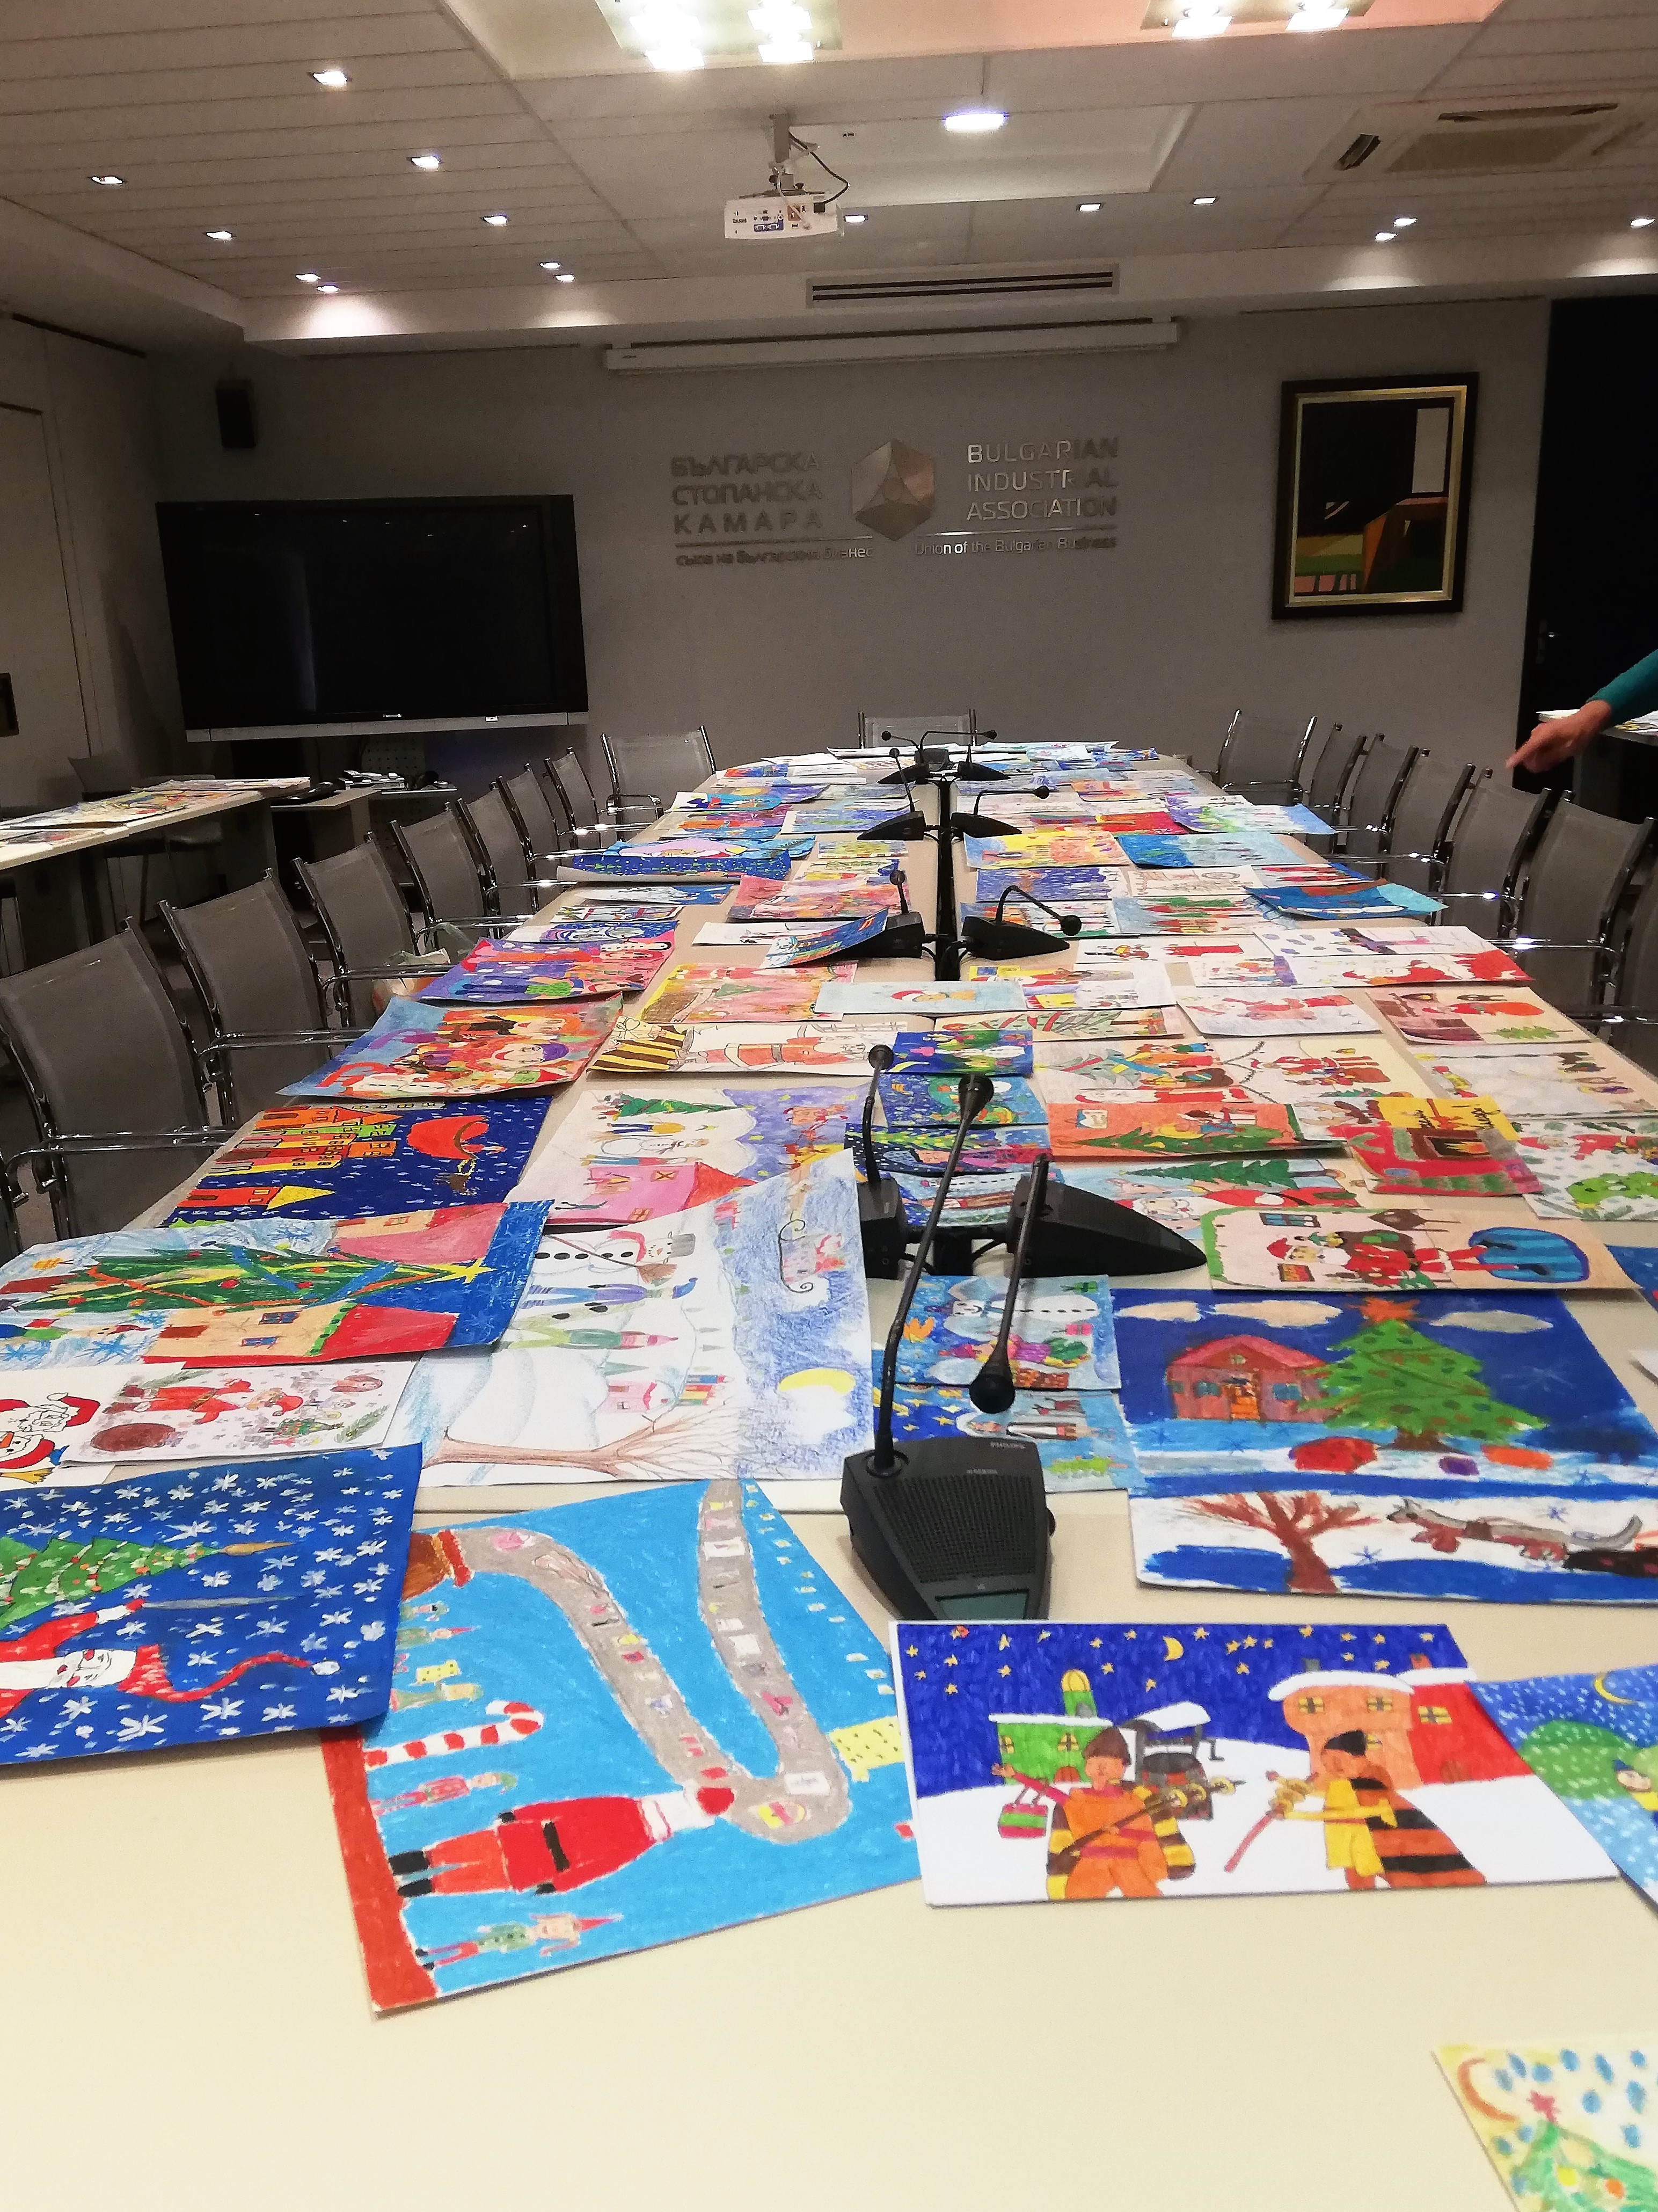 186 деца се включиха конкурса на Българска стопанска камара за детска рисунка “Коледата е възможна”